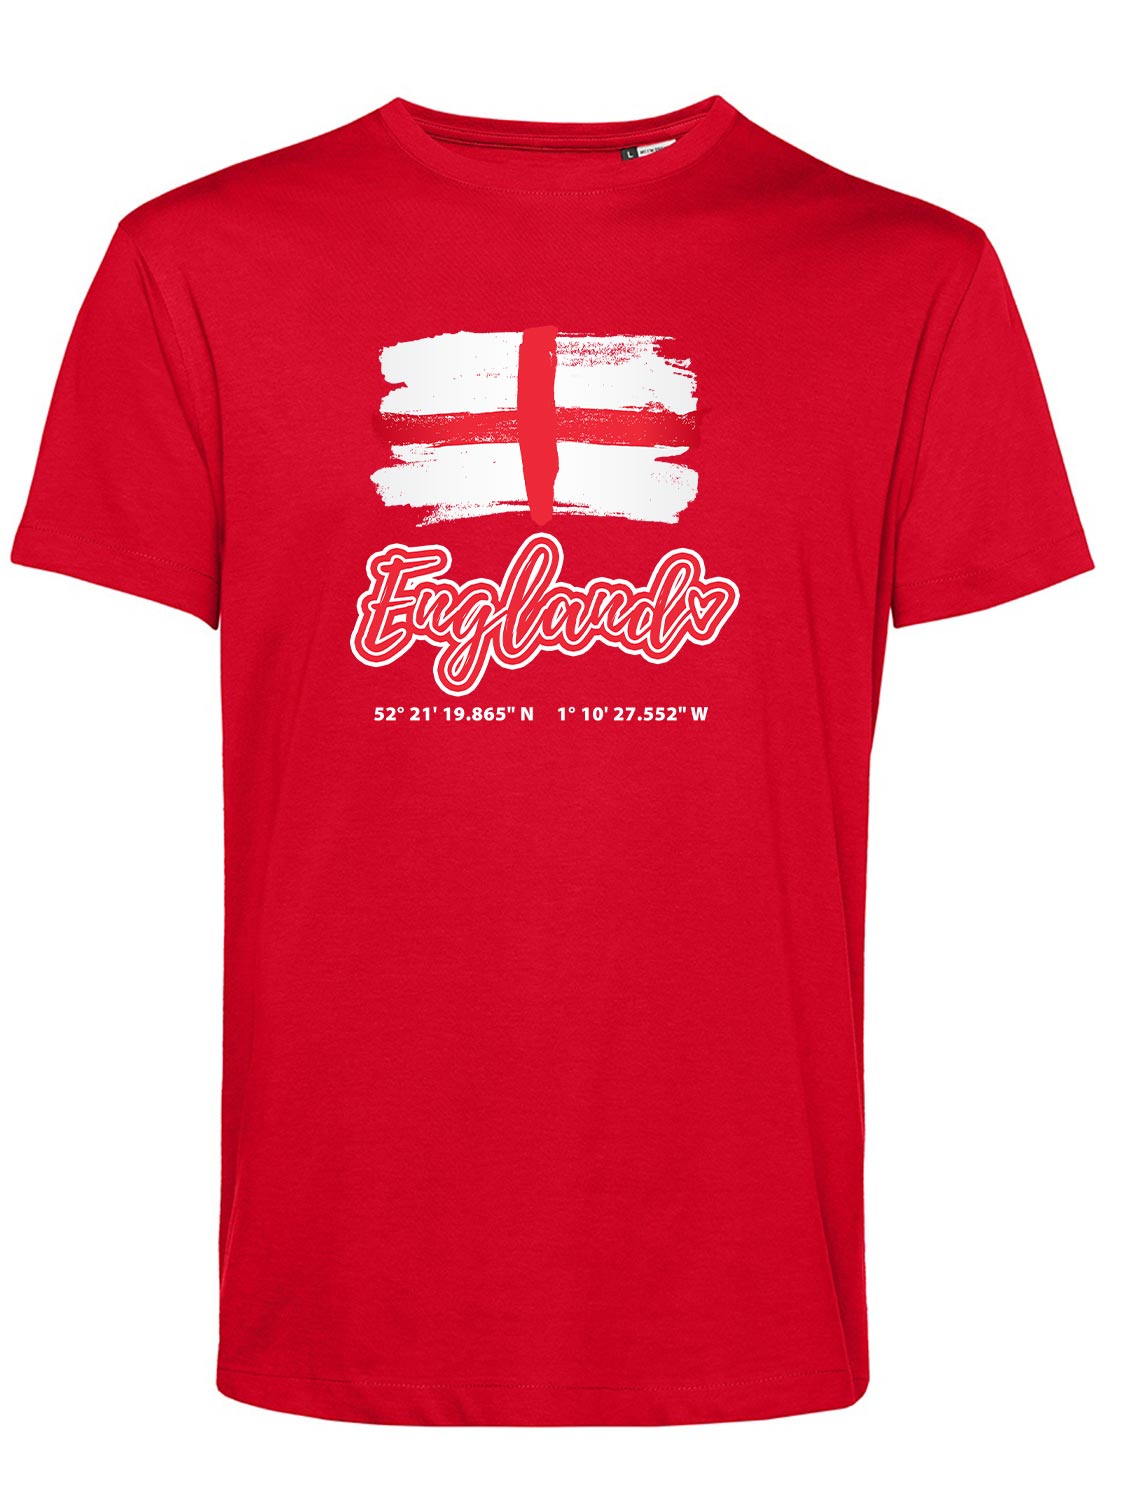 Shirt-England-1